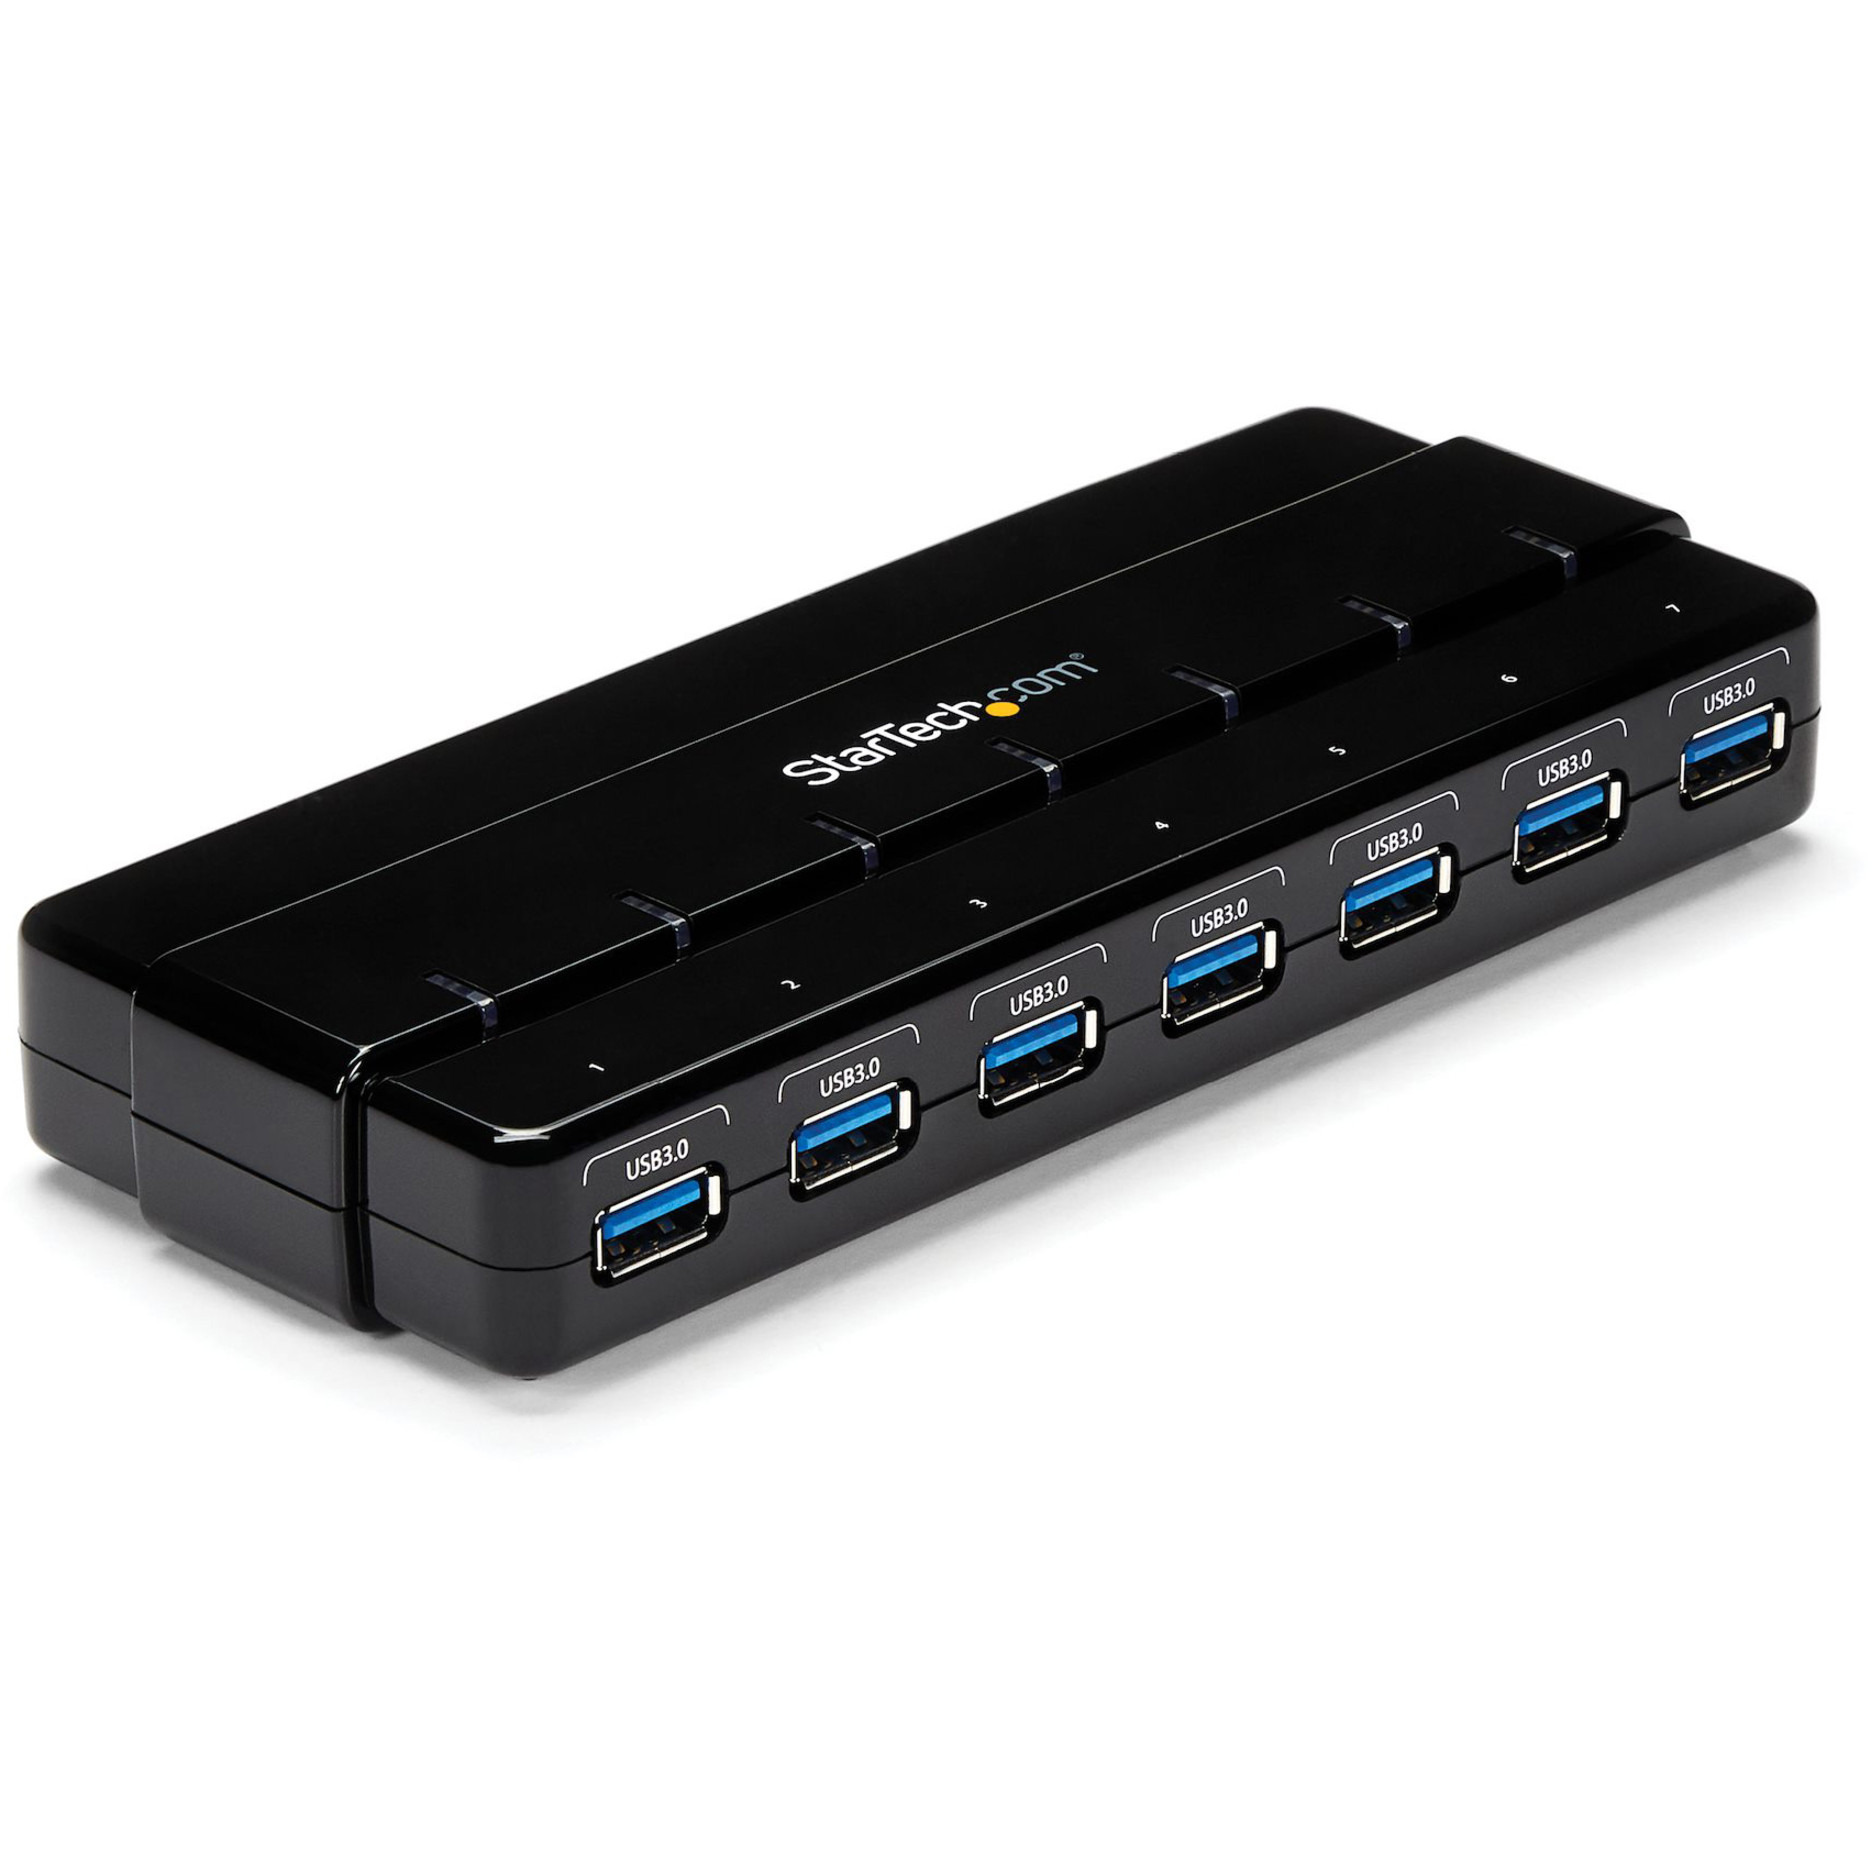 Startech .com 7 Port SuperSpeed USB 3.0 HubDesktop USB Hub with Power AdapterBlackAdd 7 external, SuperSpeed USB 3.0 ports to a comp… ST7300USB3B